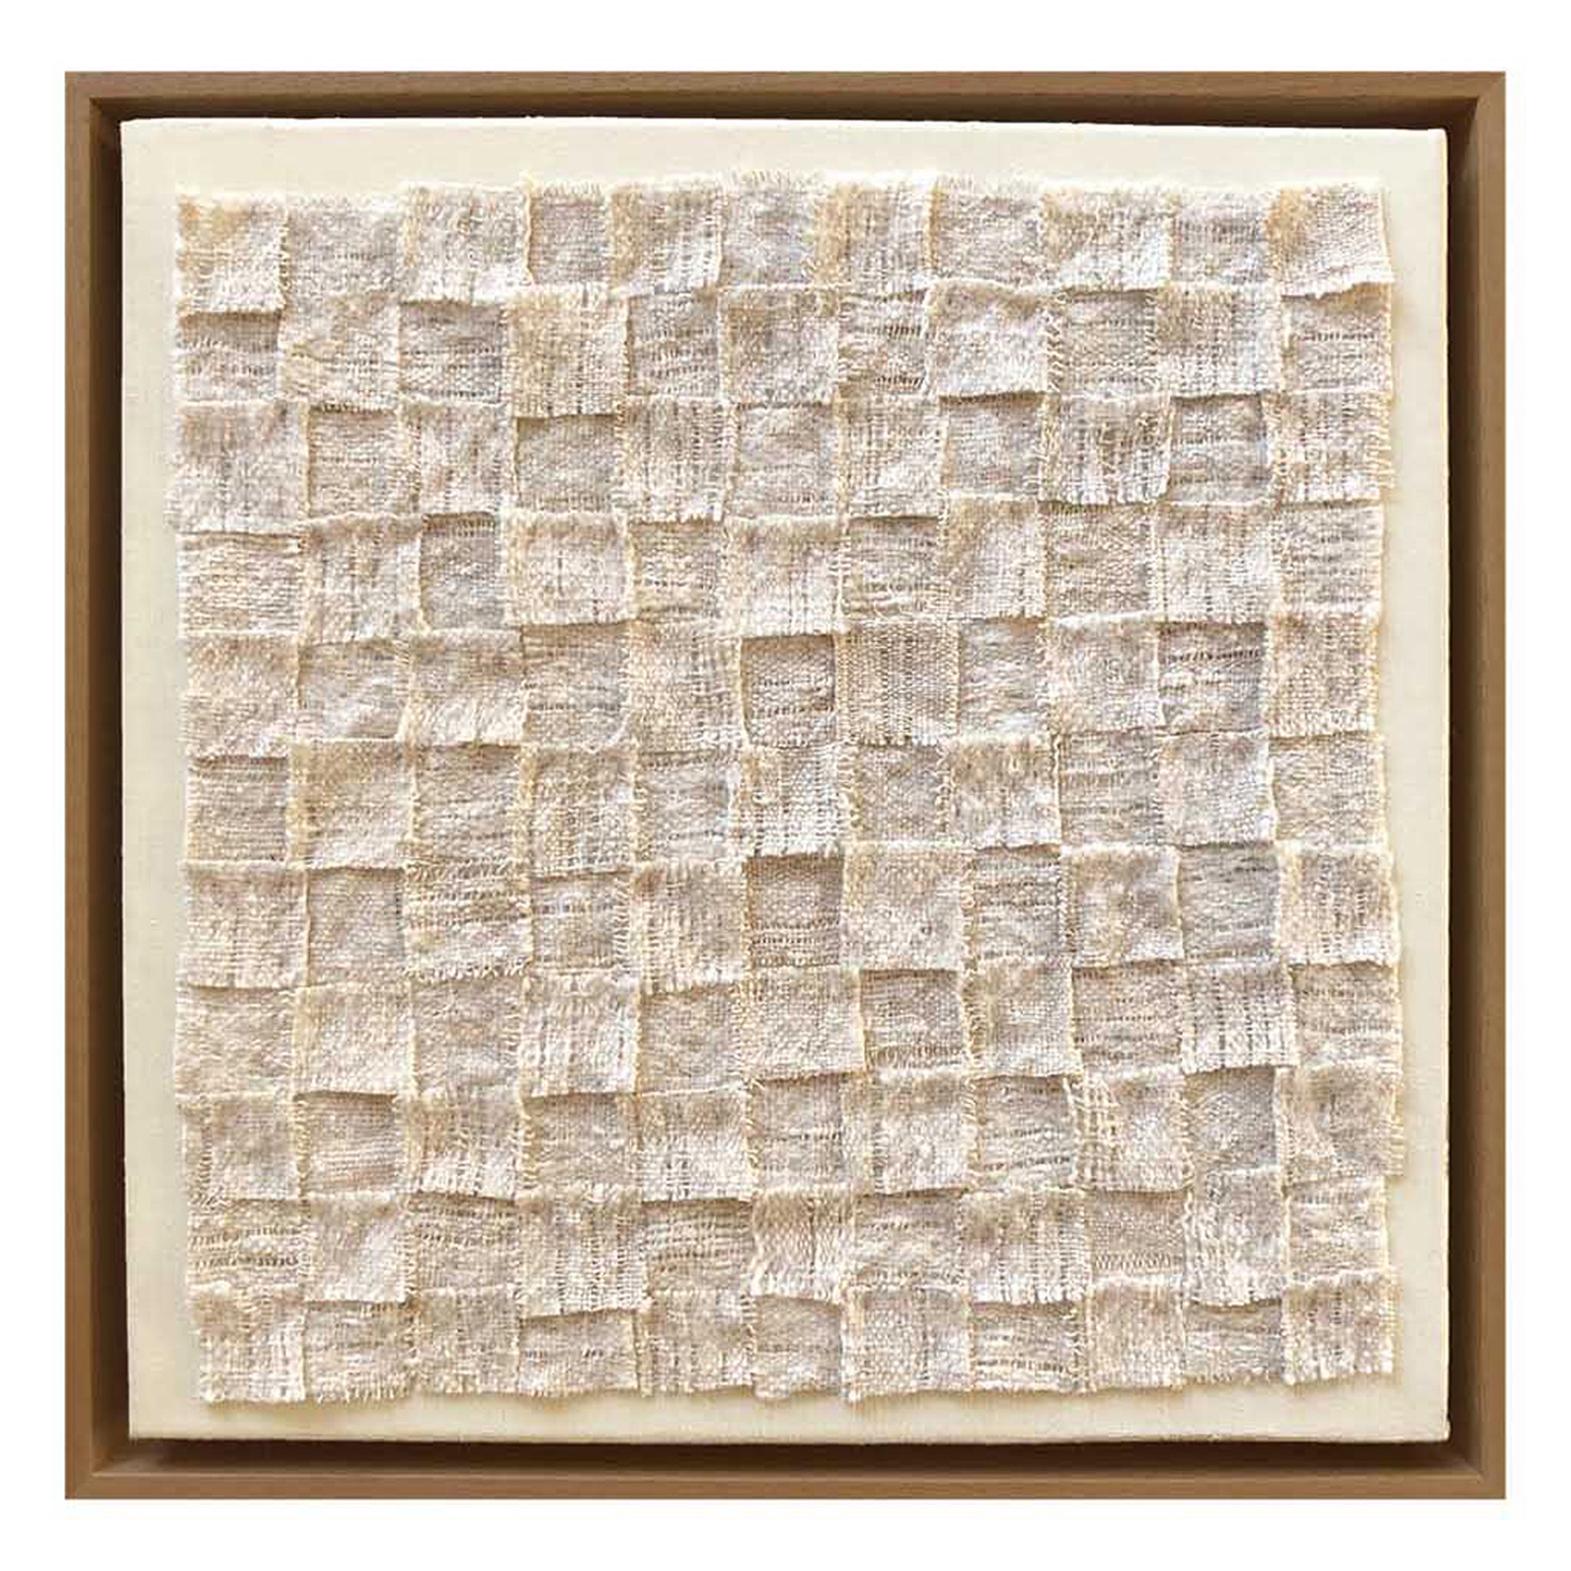 Zellige, Textile White Wall Piece, Unique Piece, Made of Wool by memòri studio